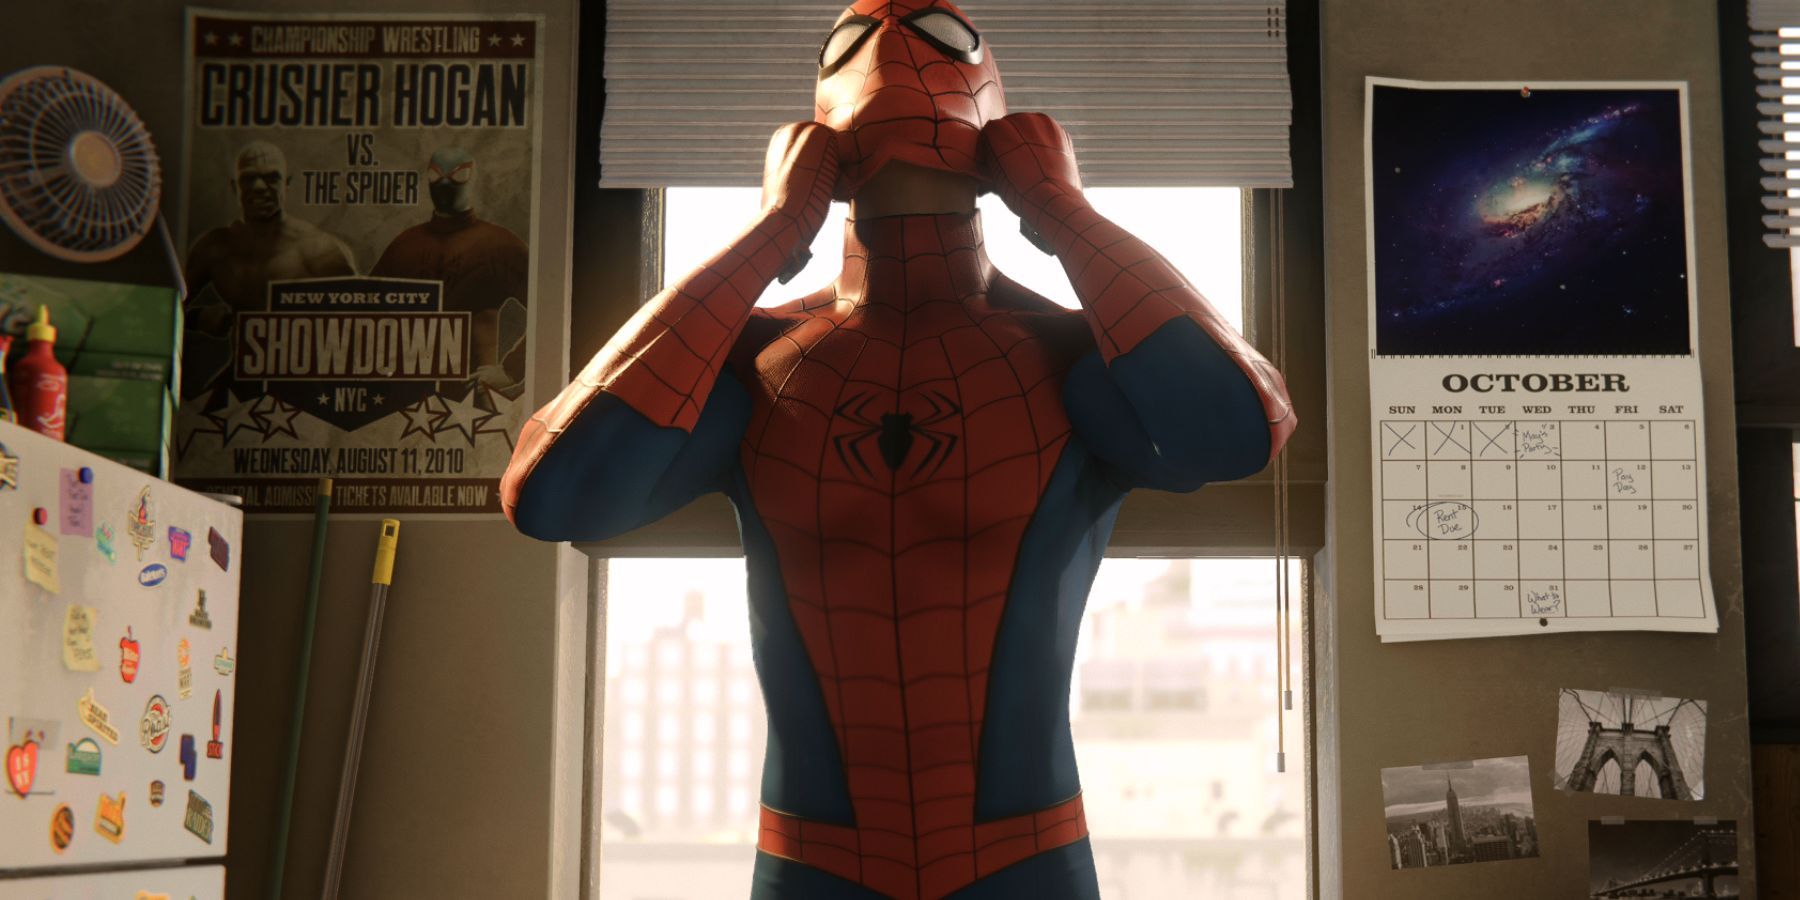 Marvel's Spider-Man 2 SDCC Panel Announced, Features Devs & Actors